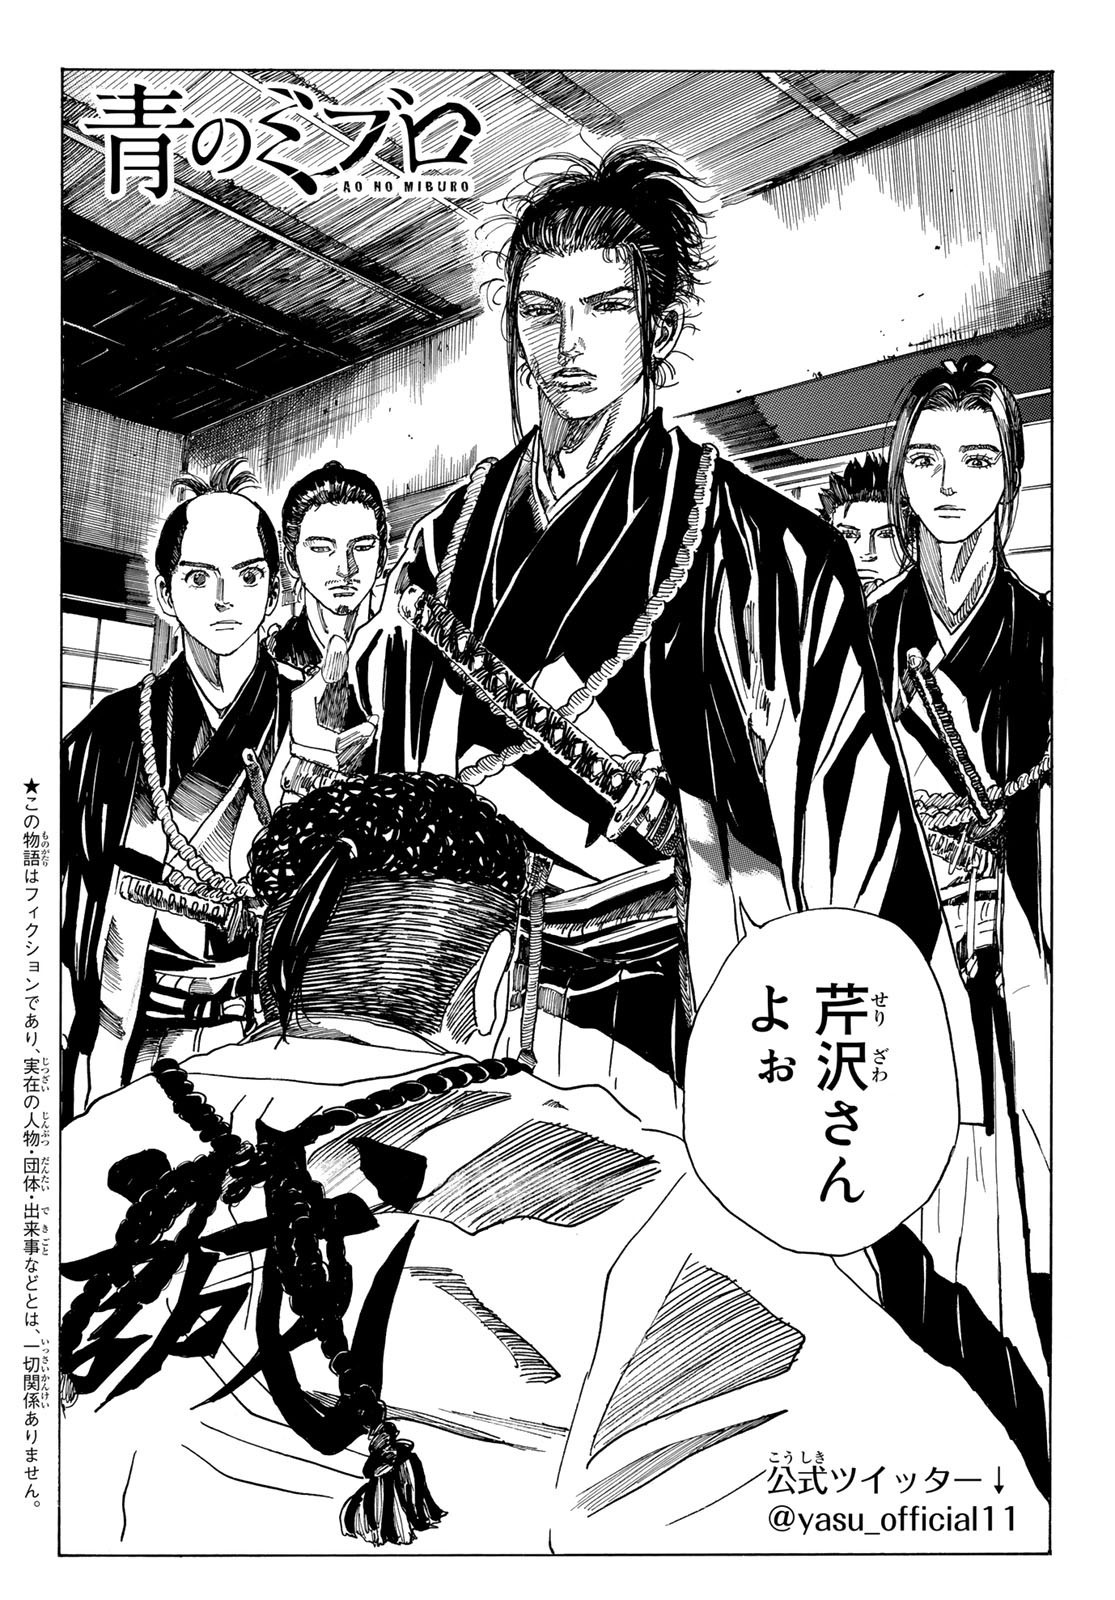 Ao no Miburo - Chapter 076 - Page 2